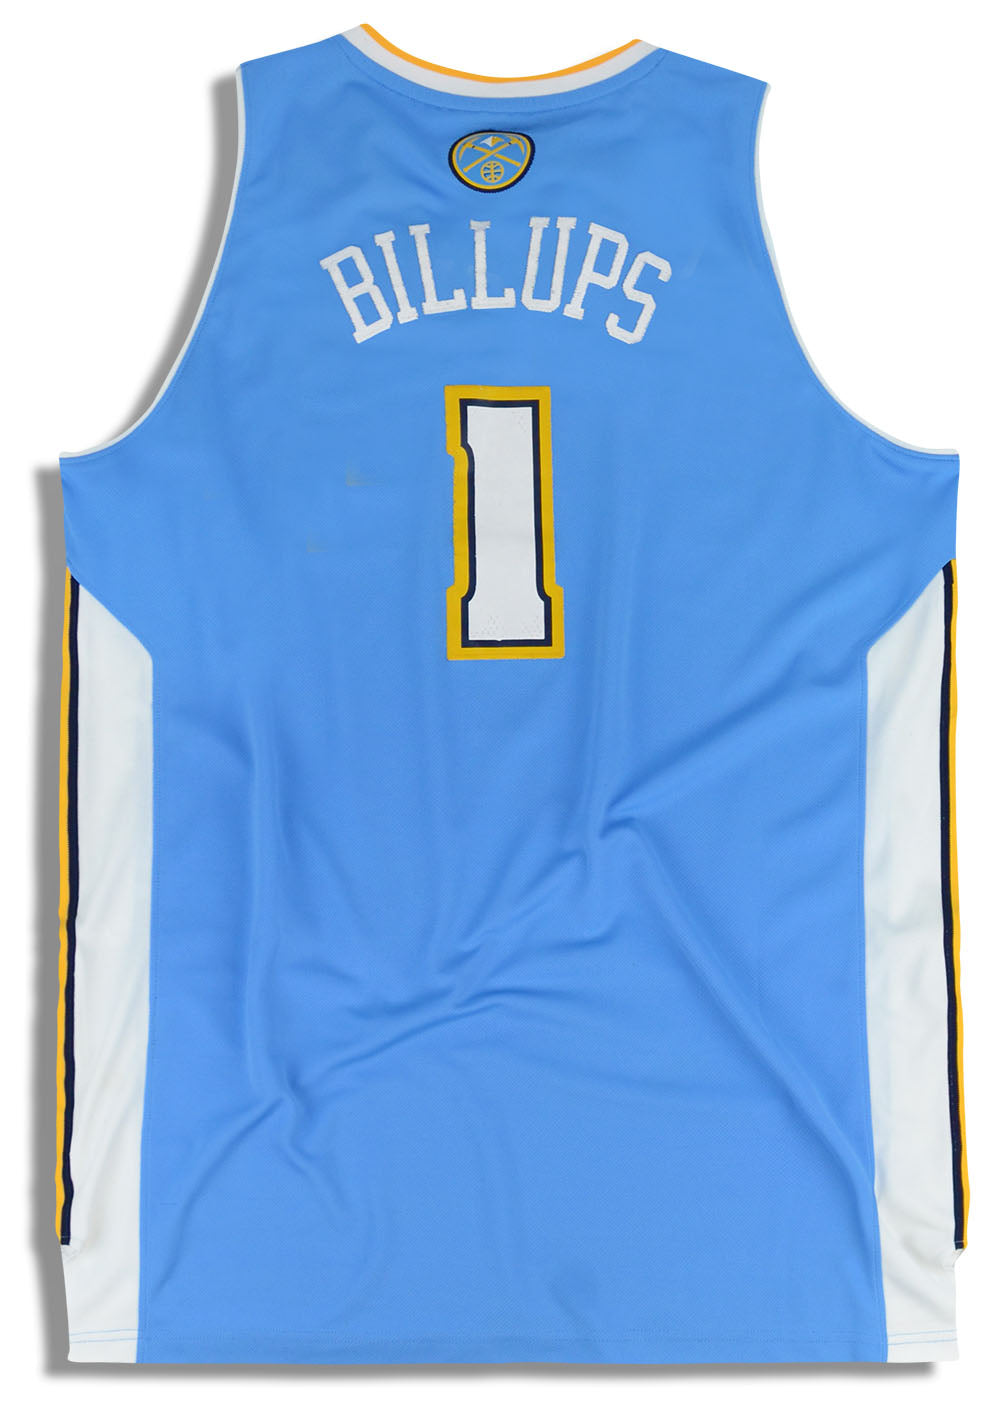 Chauncey Billups 7 Sleeveless Adidas NBA Top Denver Nuggets 